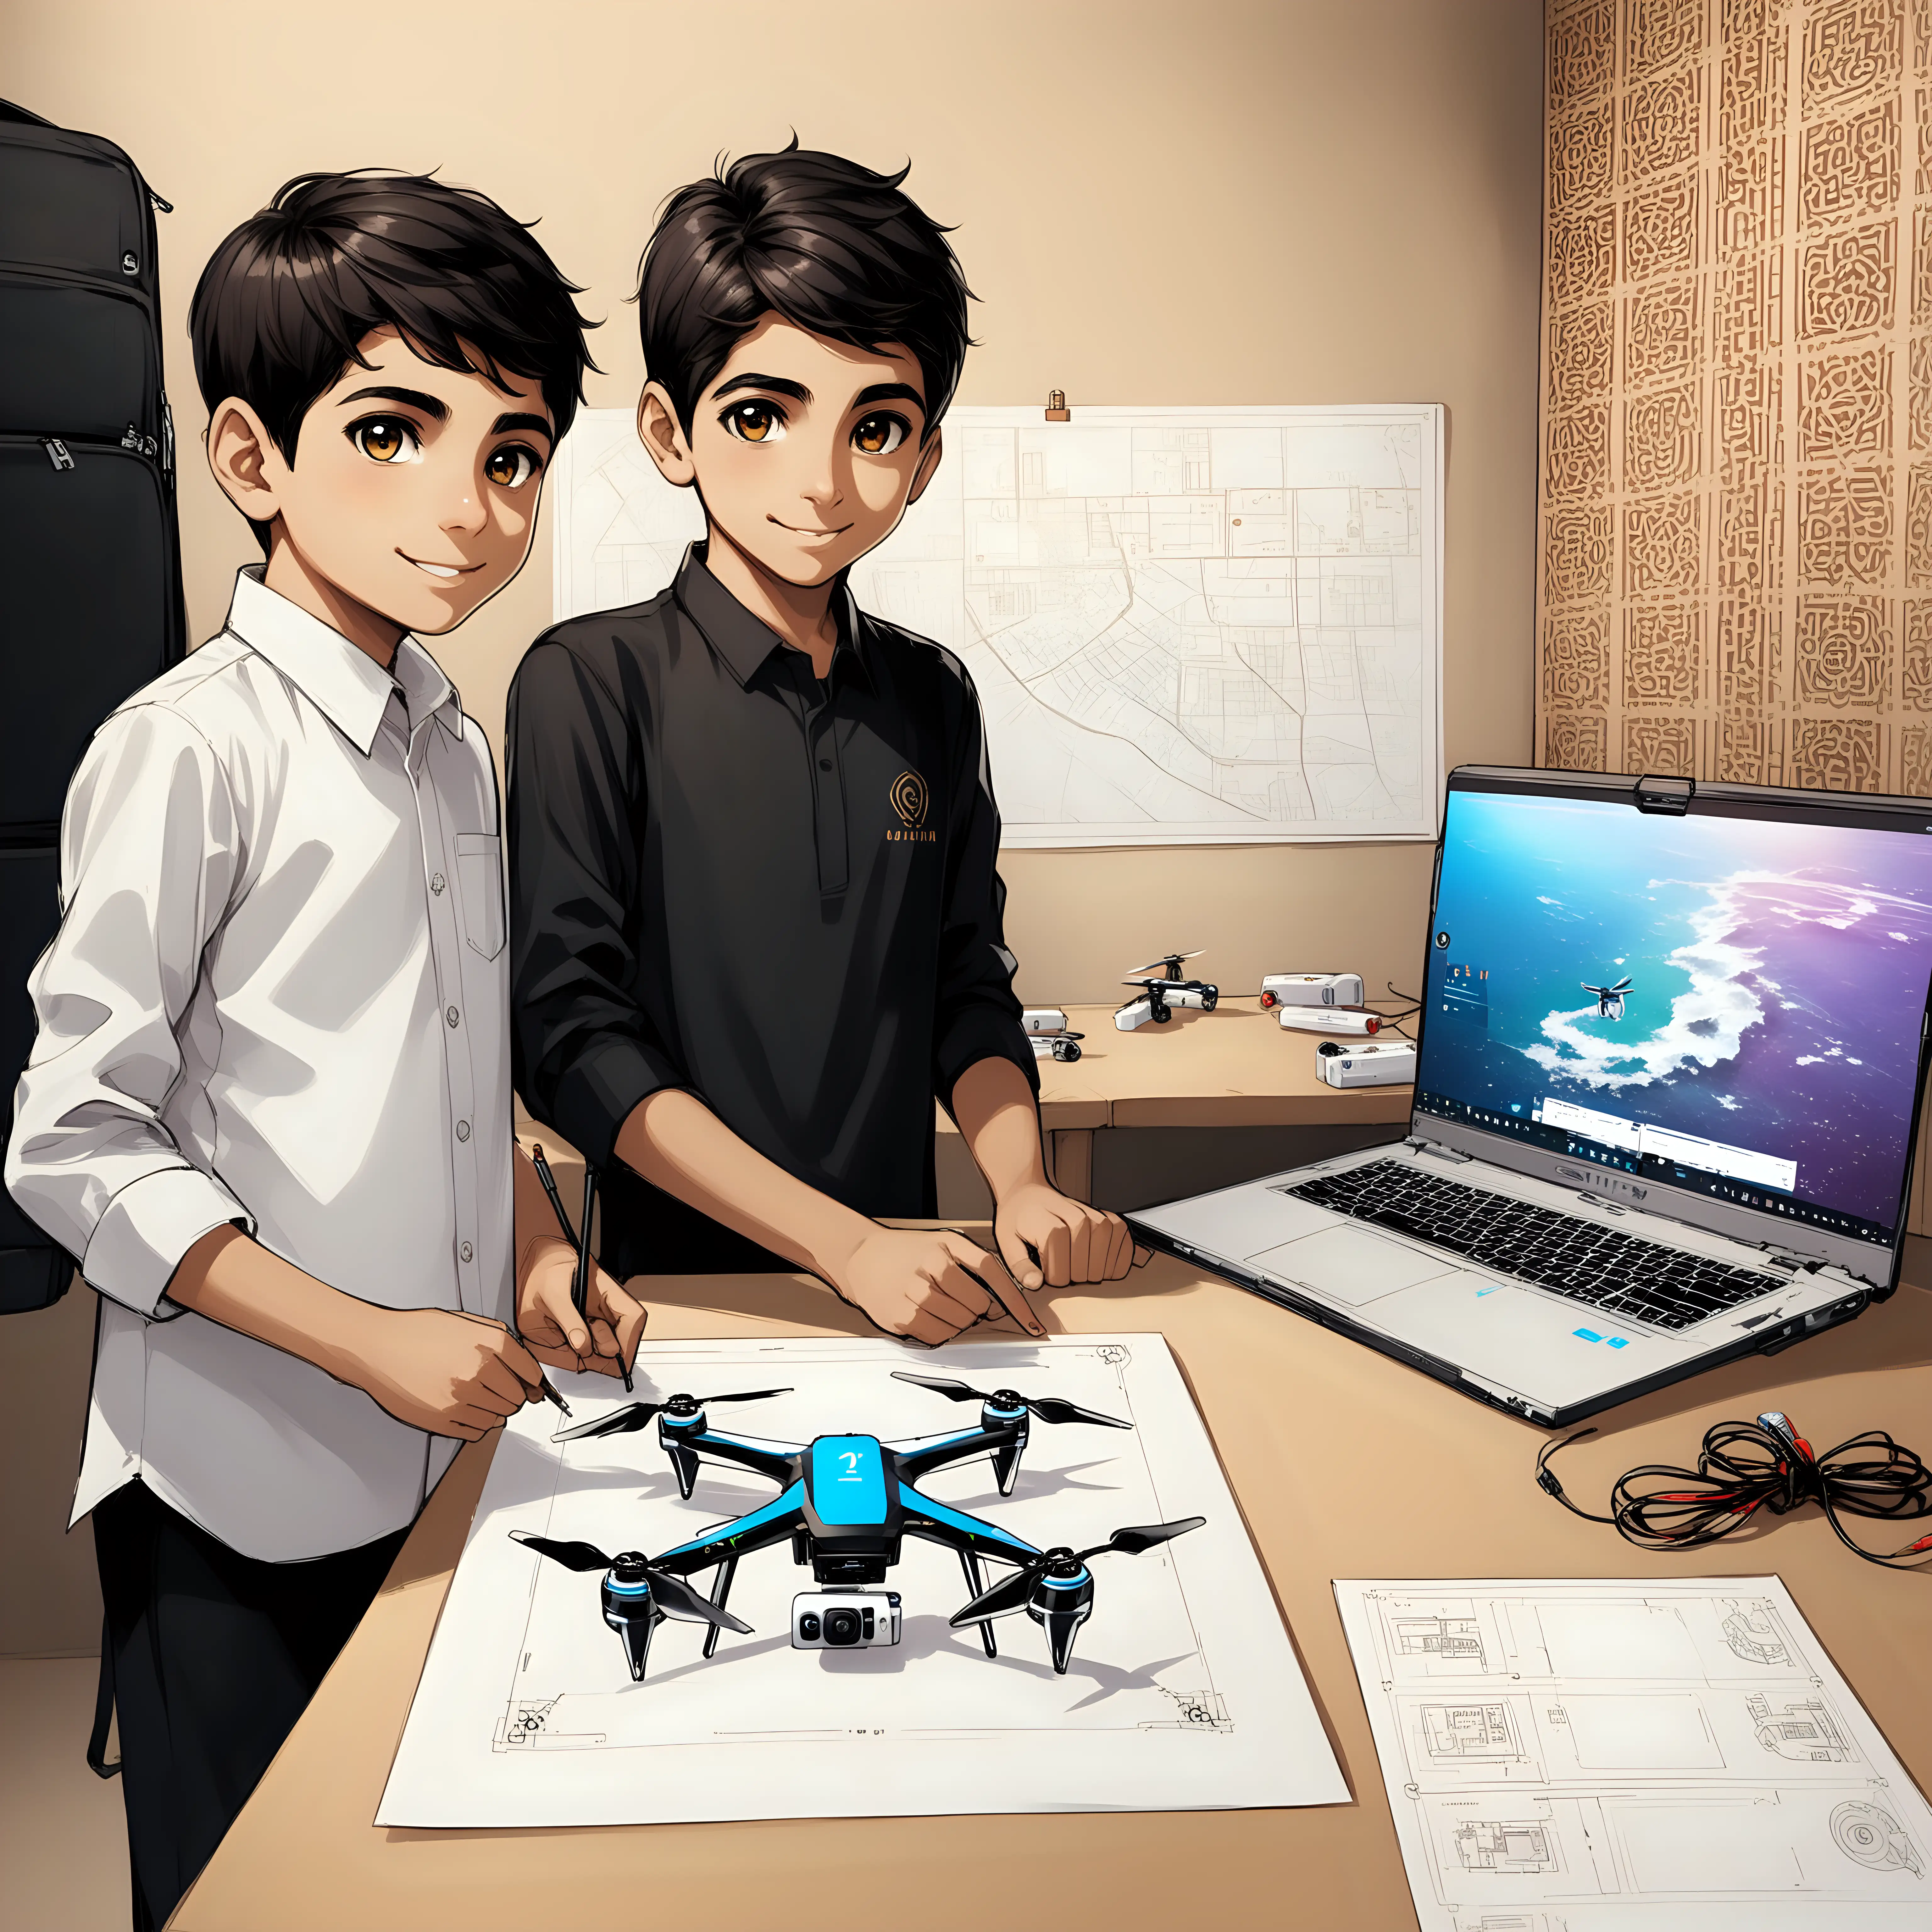 Persian Boys Designing HighTech Drones in Modern Workshop